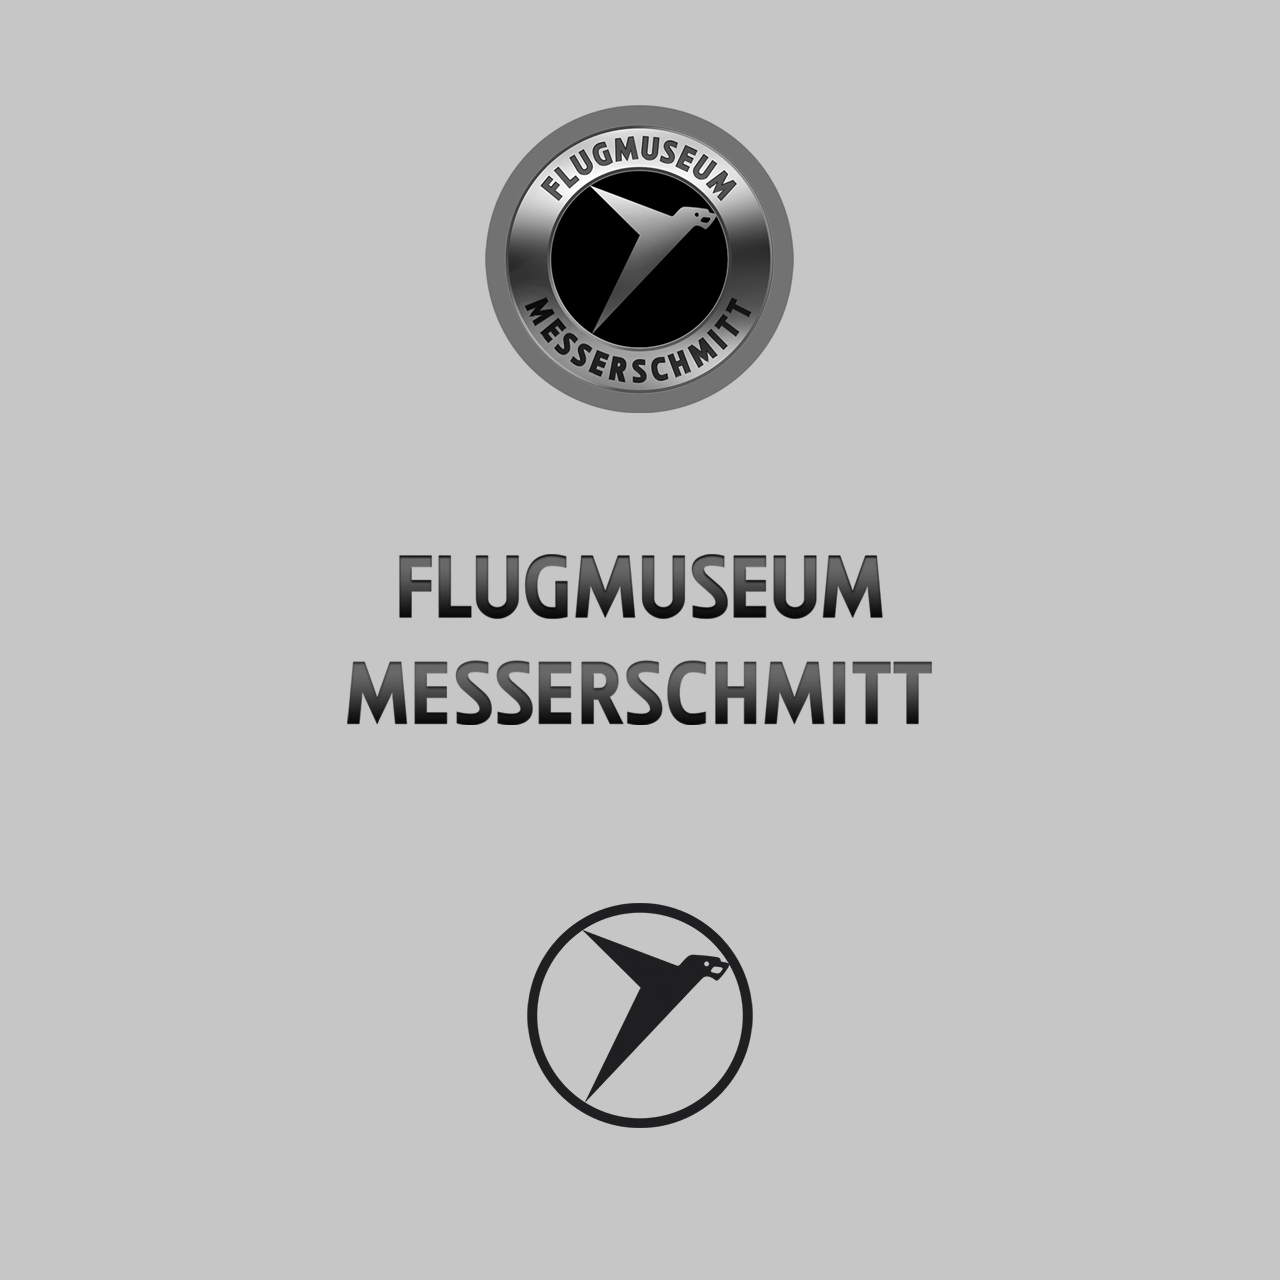 Nexus-Group, Portfolio, Flugmuseum Messerschmitt, Corporate Design, Elemente, Signet, Wortmarke, Logo,